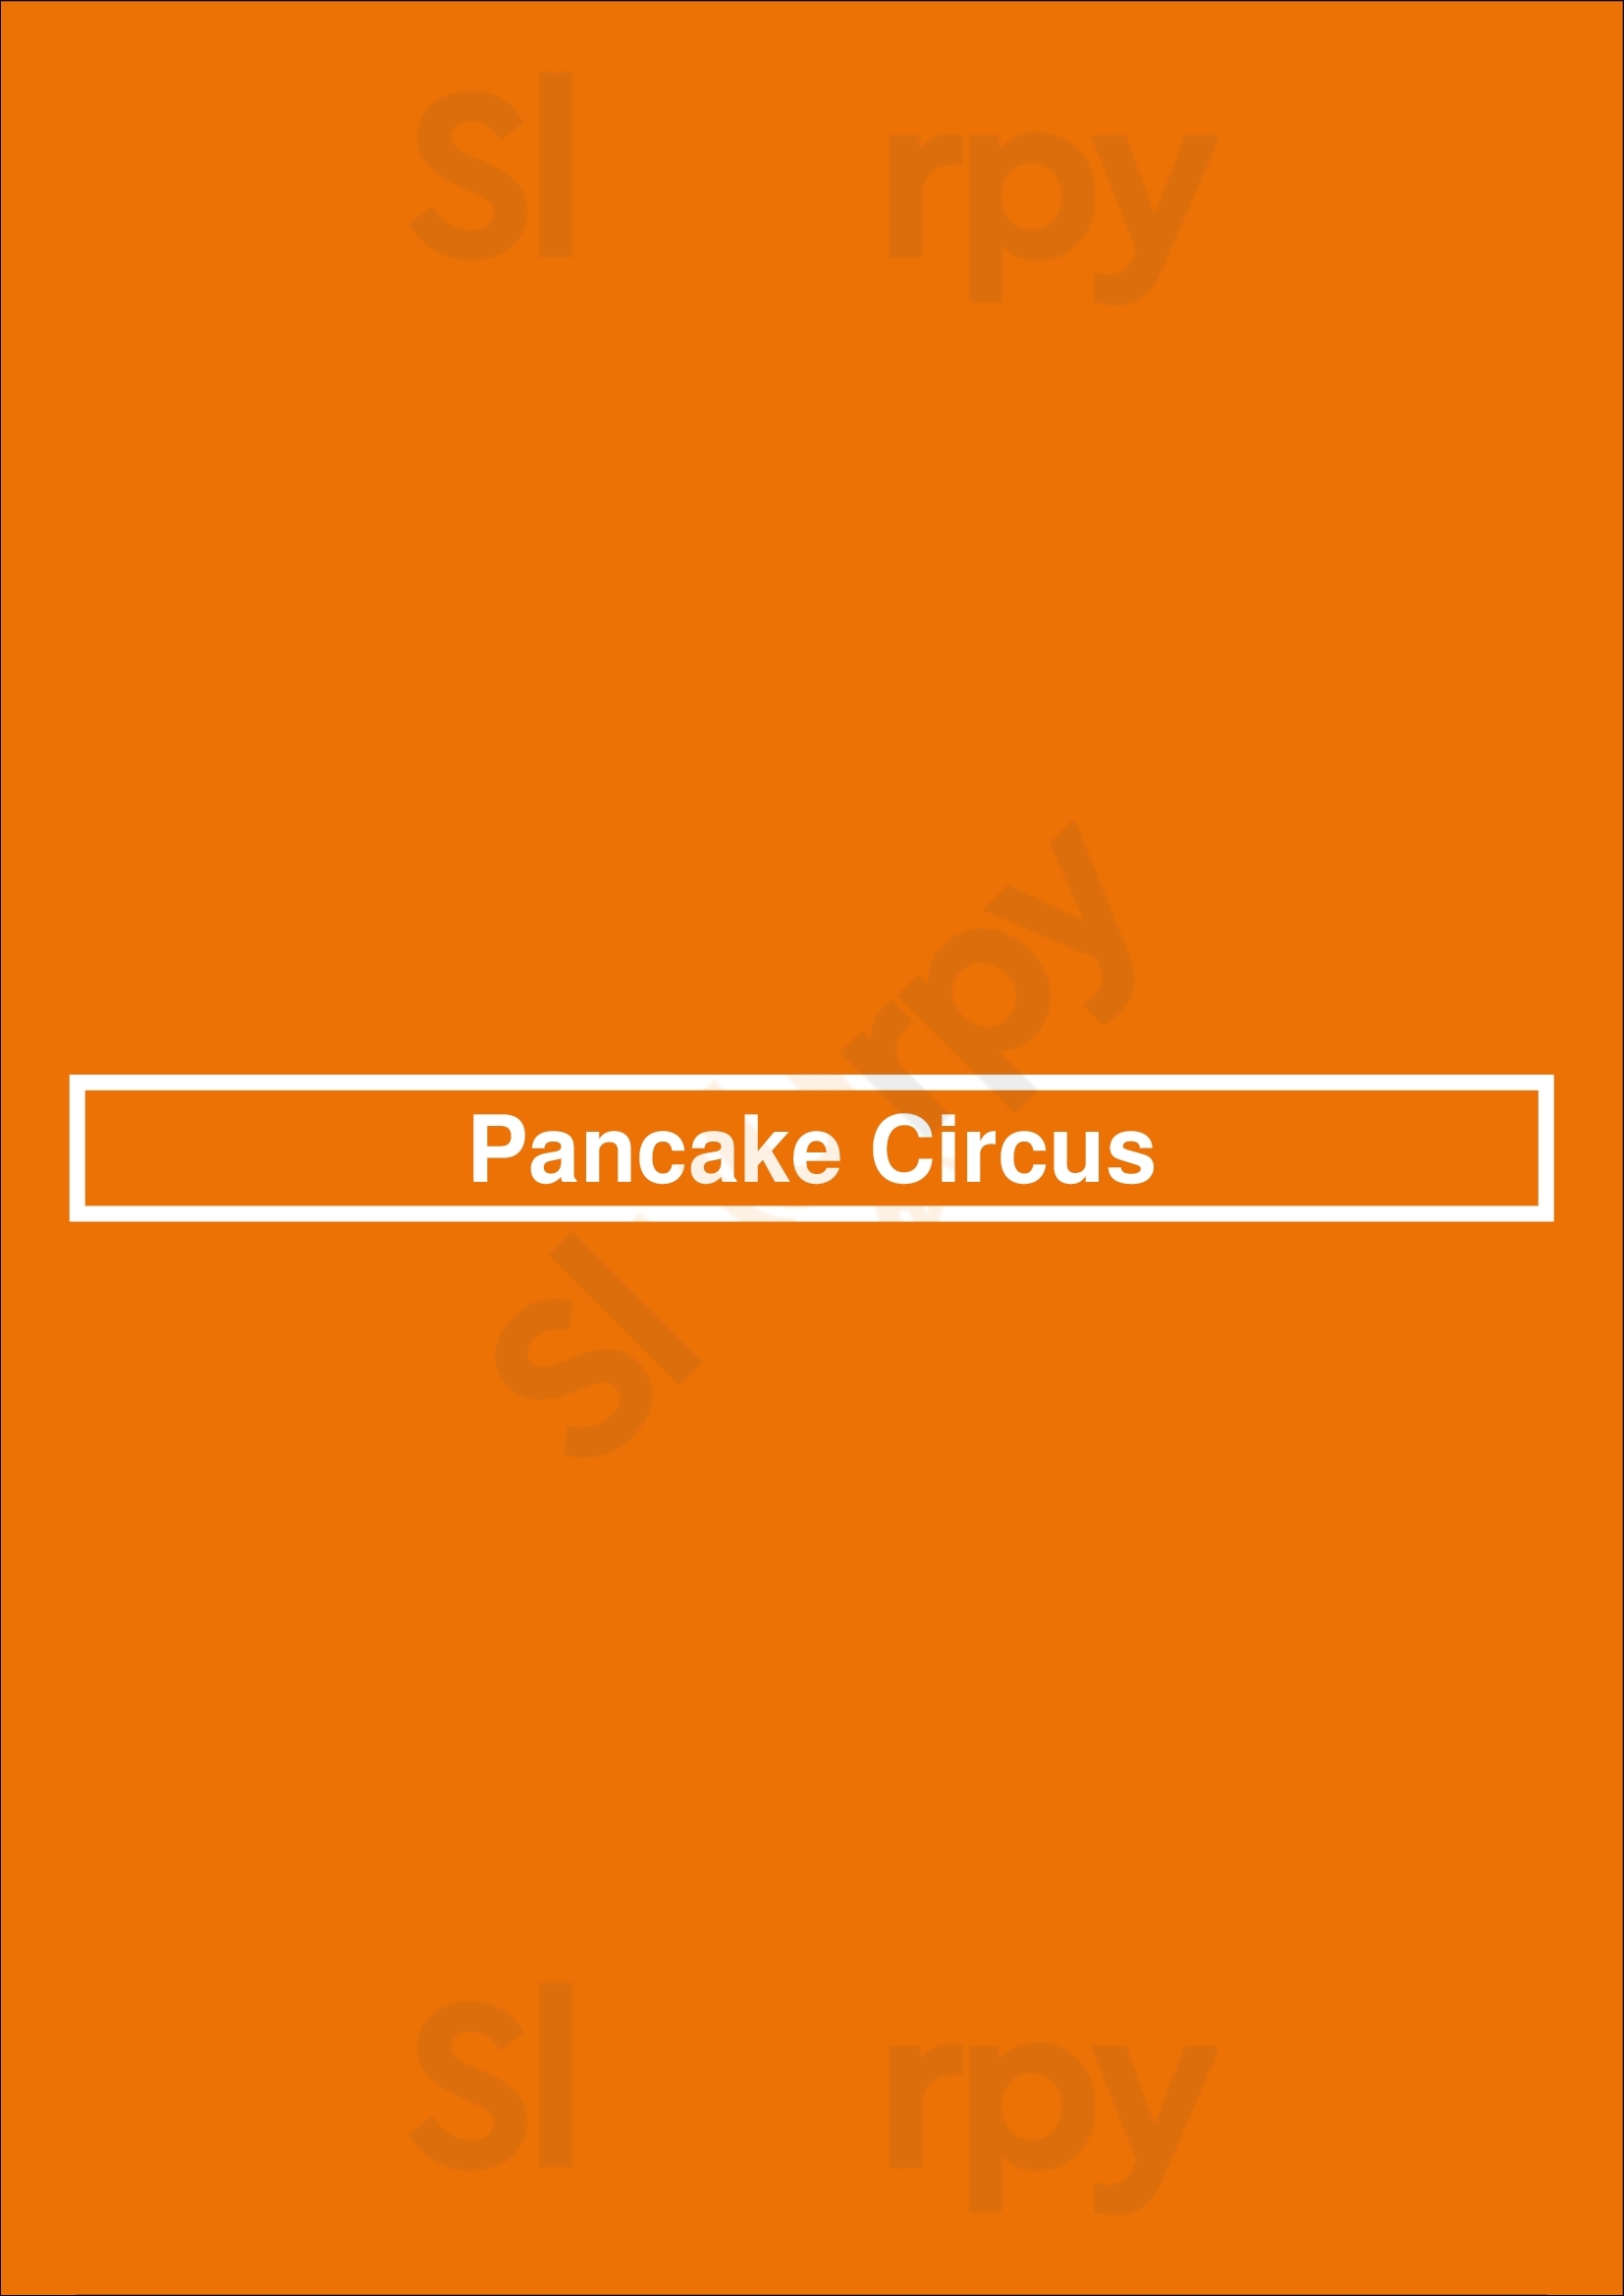 Pancake Circus Sacramento Menu - 1